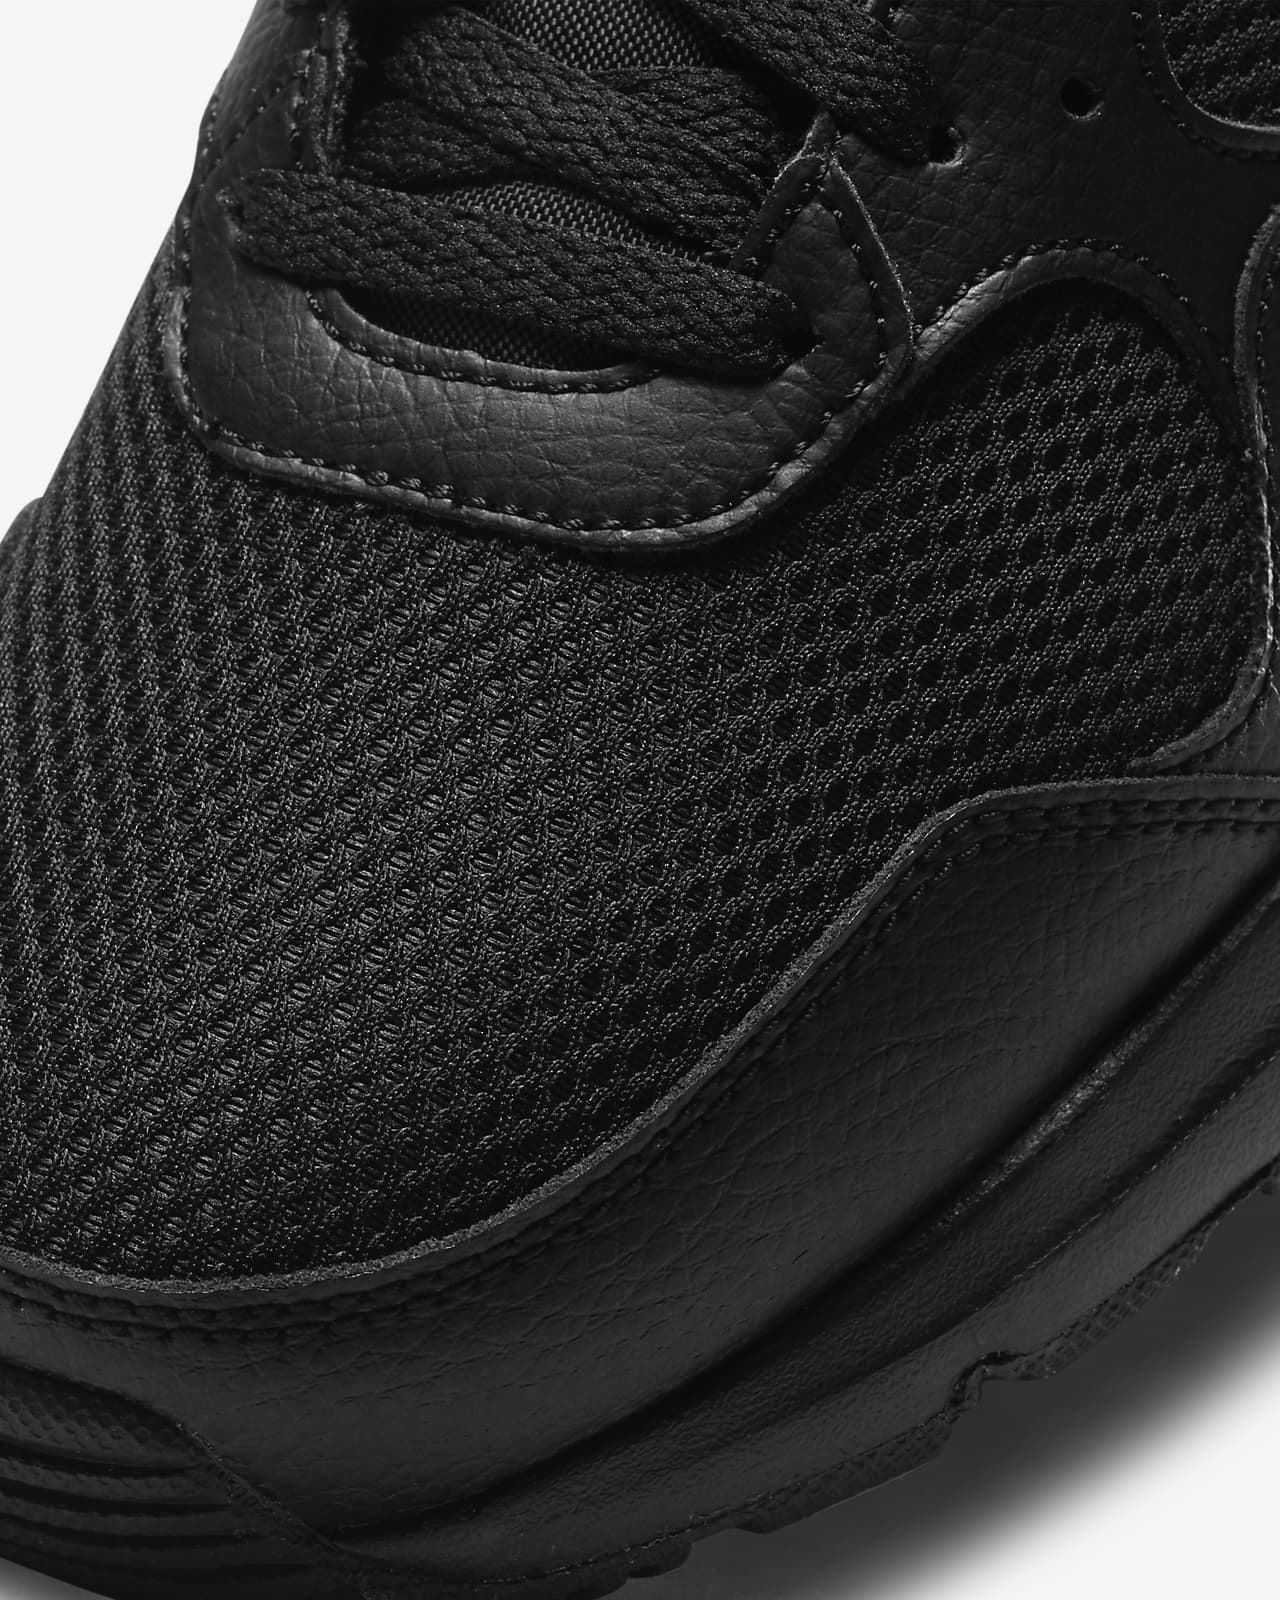 Chaussure Nike Air Max SC pour Homme